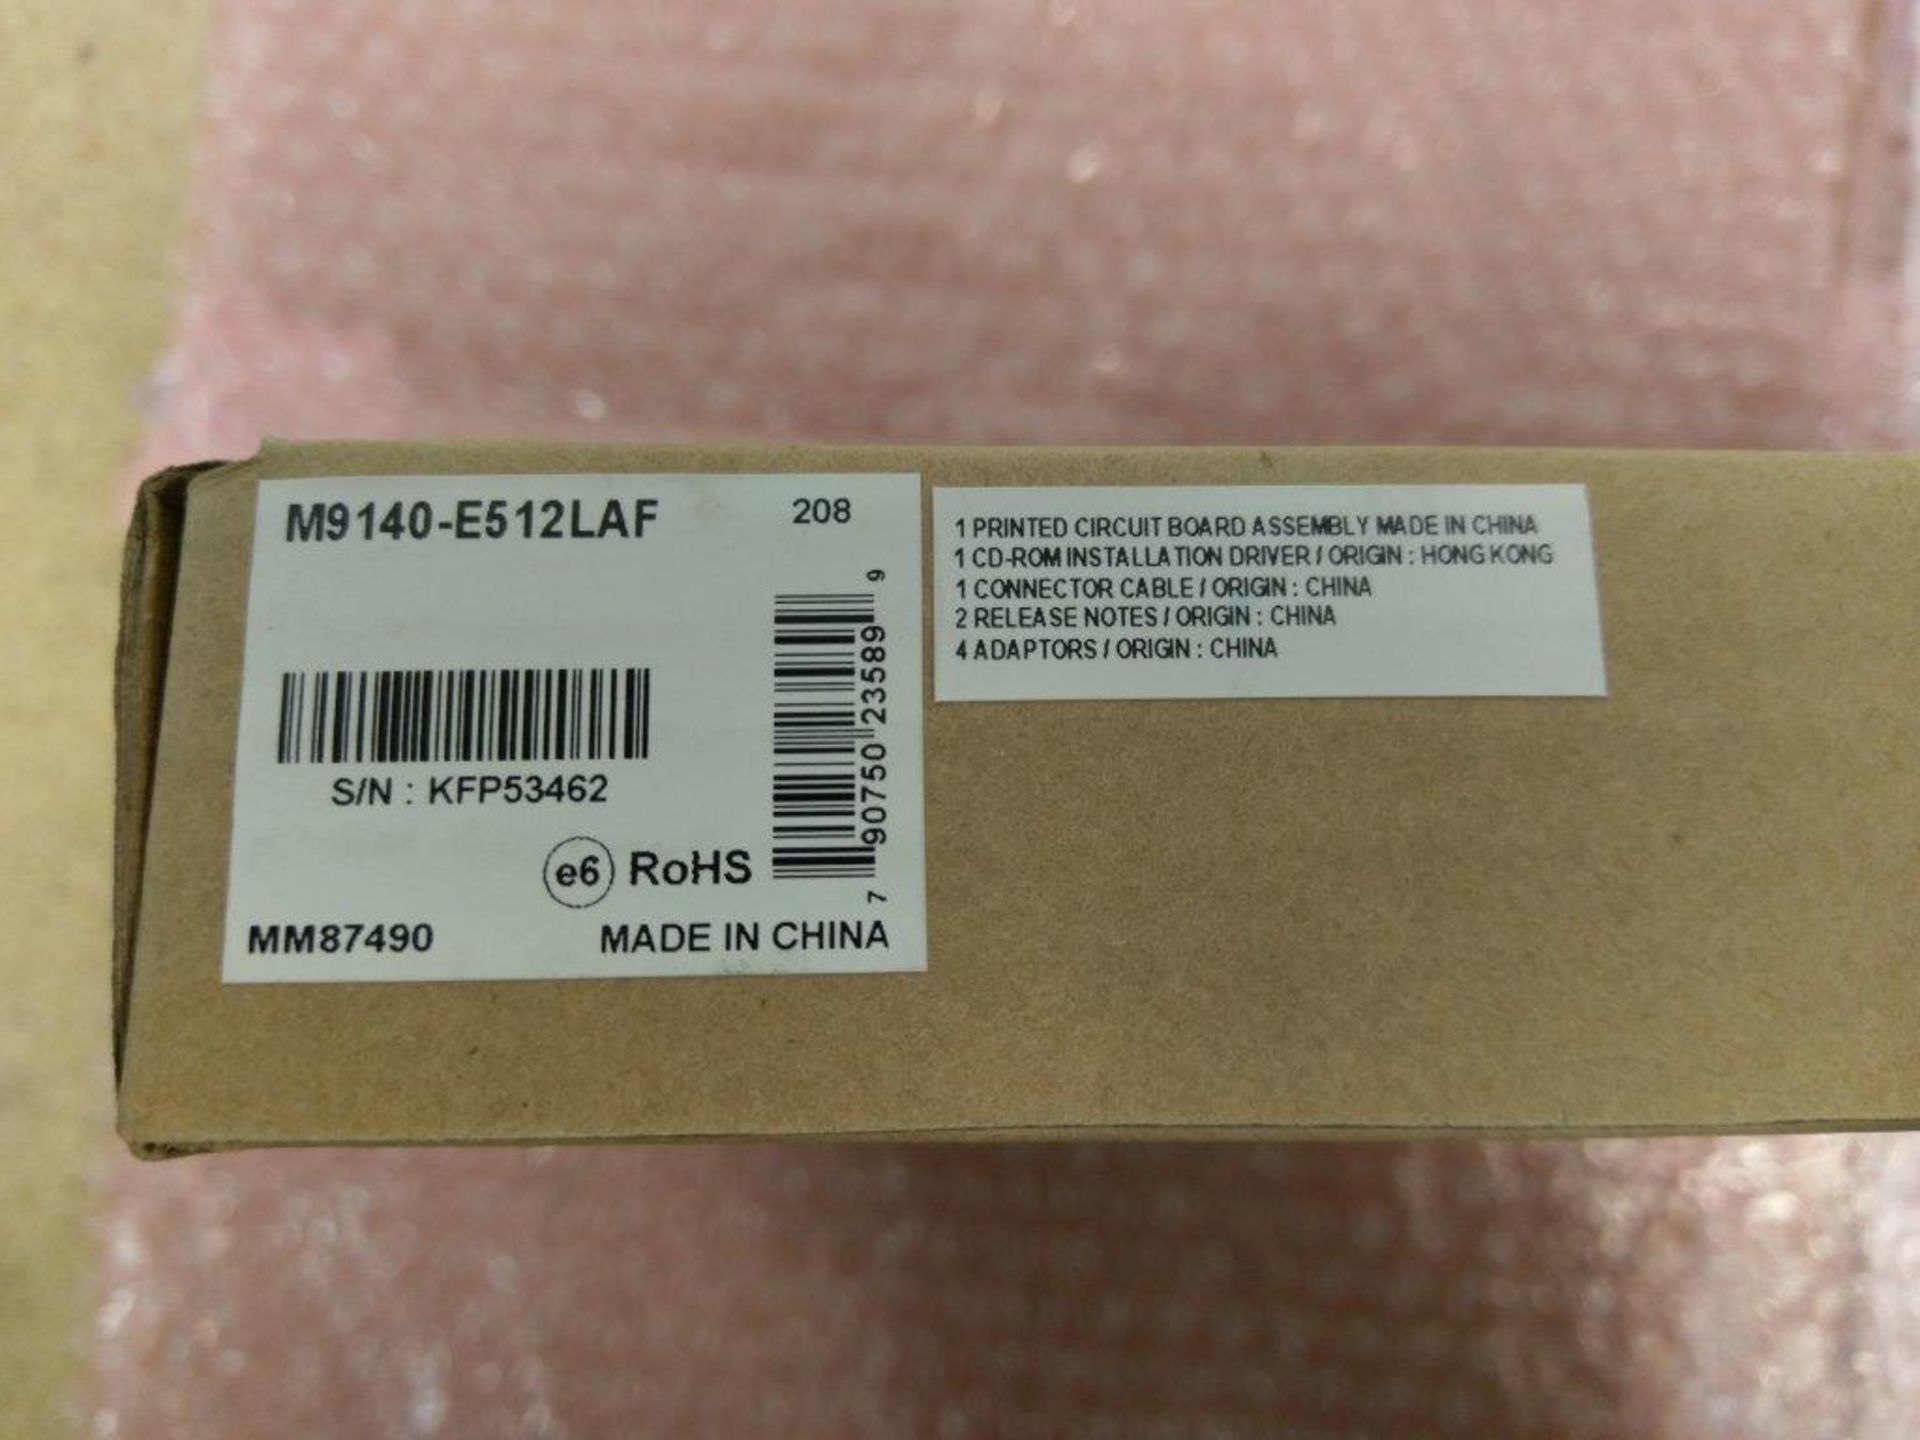 Matrox M9140 LP Pcle x16 PCI Express Graphics Card Model M9140-E512LAF - Image 4 of 5